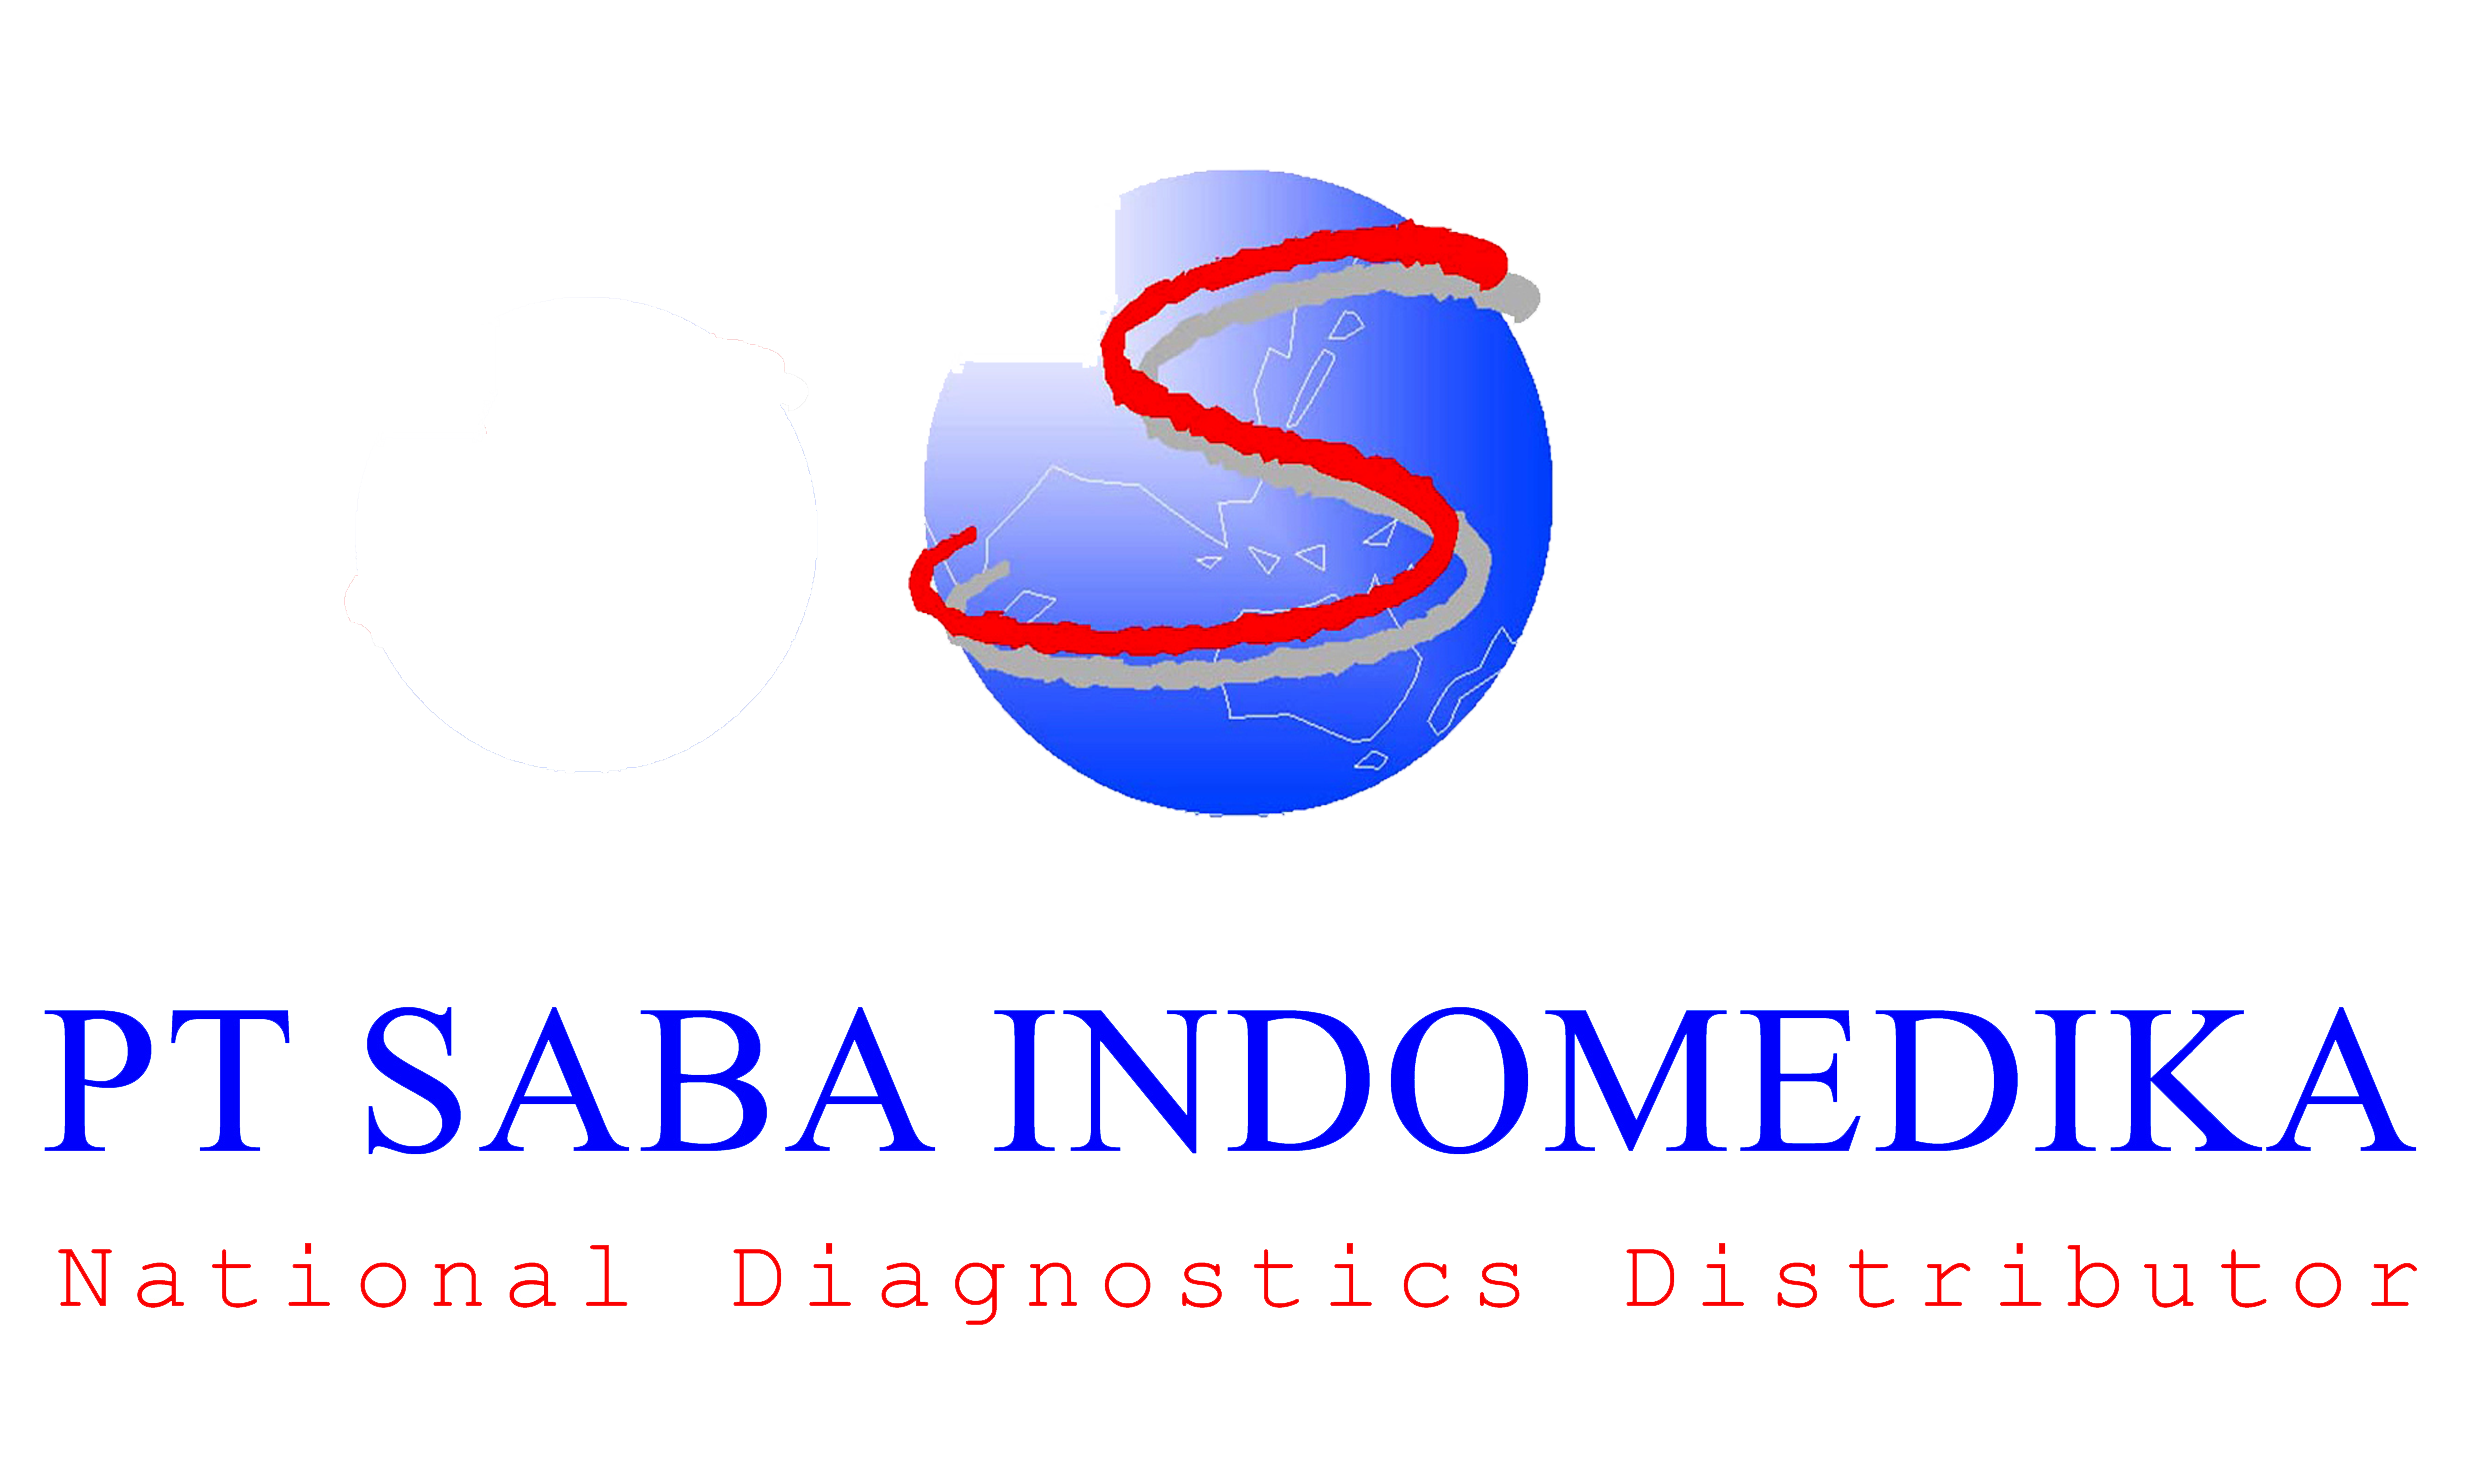 Saba Indomedika Pt 5976ce3917264